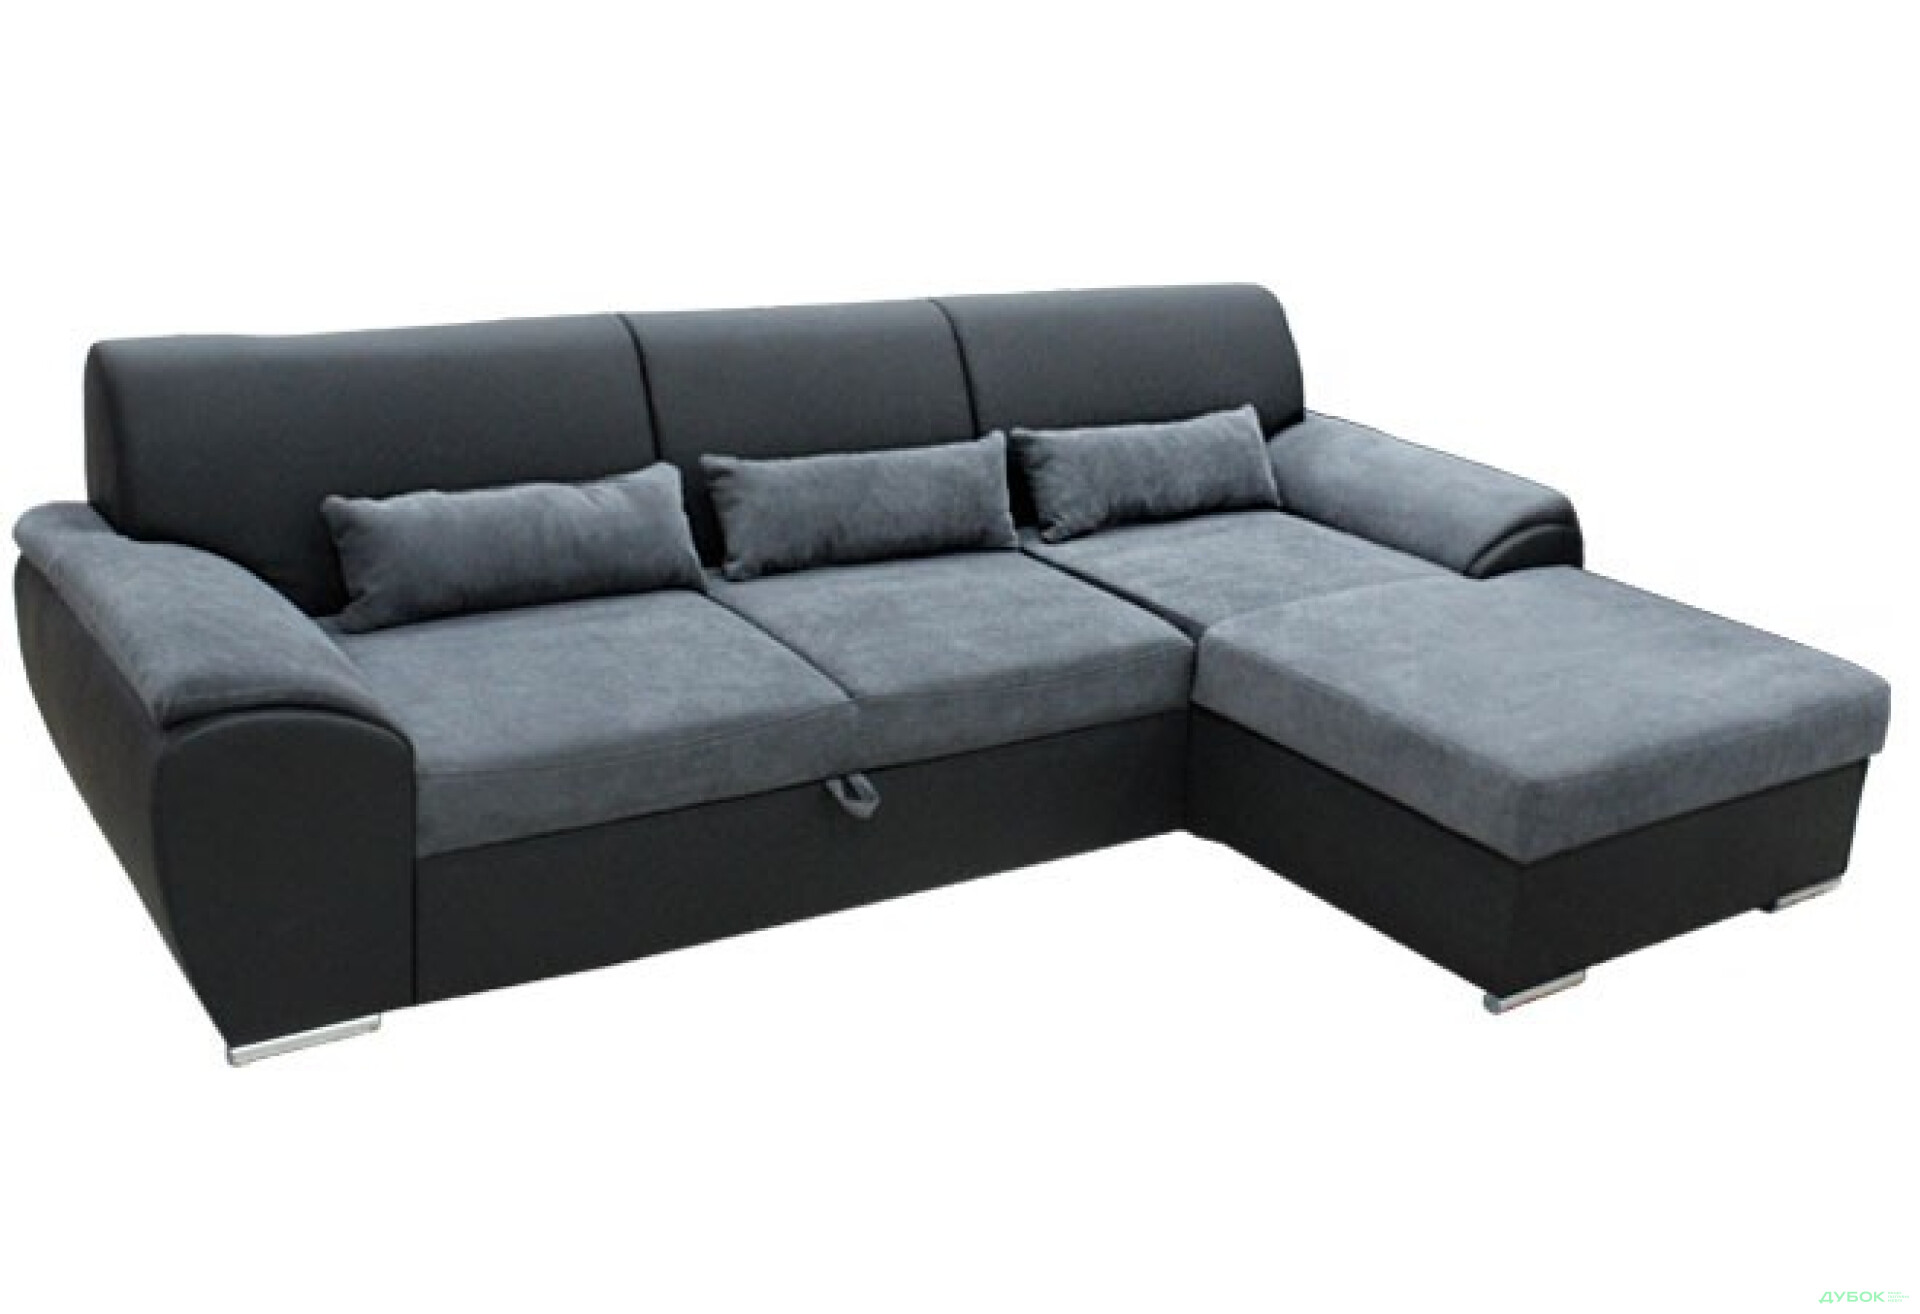 Фото 1 - Мягкий уголок Рамон / Ramon Угловой диван (Дизайн 1) Давидос